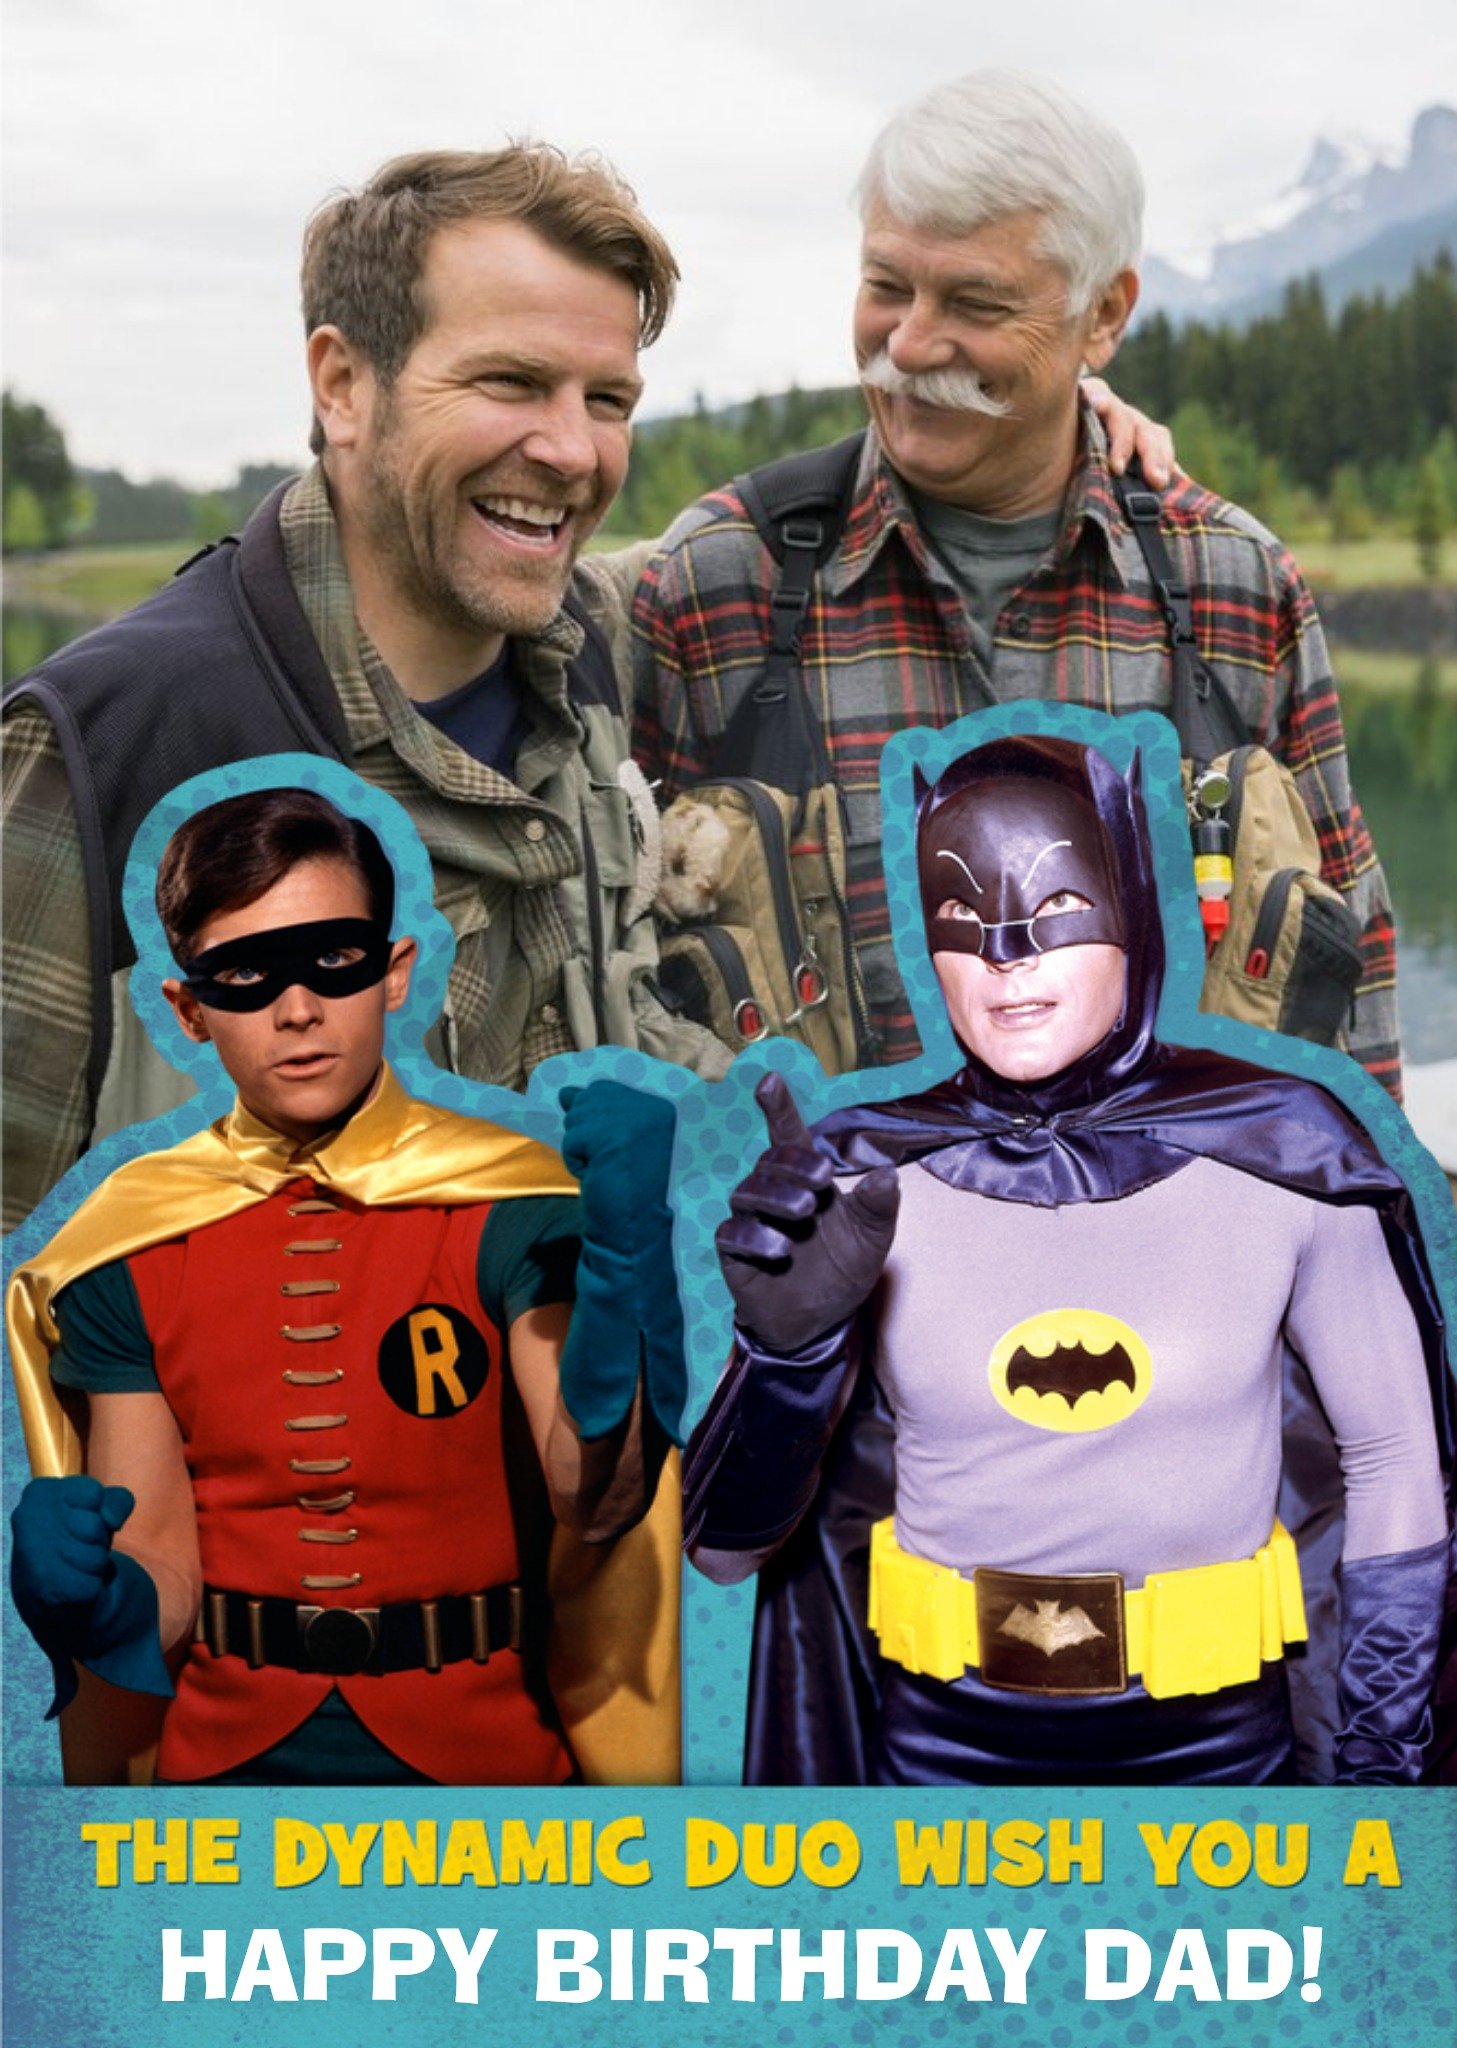 The Dynamic Duo Wish You A Happy Birthday Dad - Batman & Robin Photo Upload, Large Card